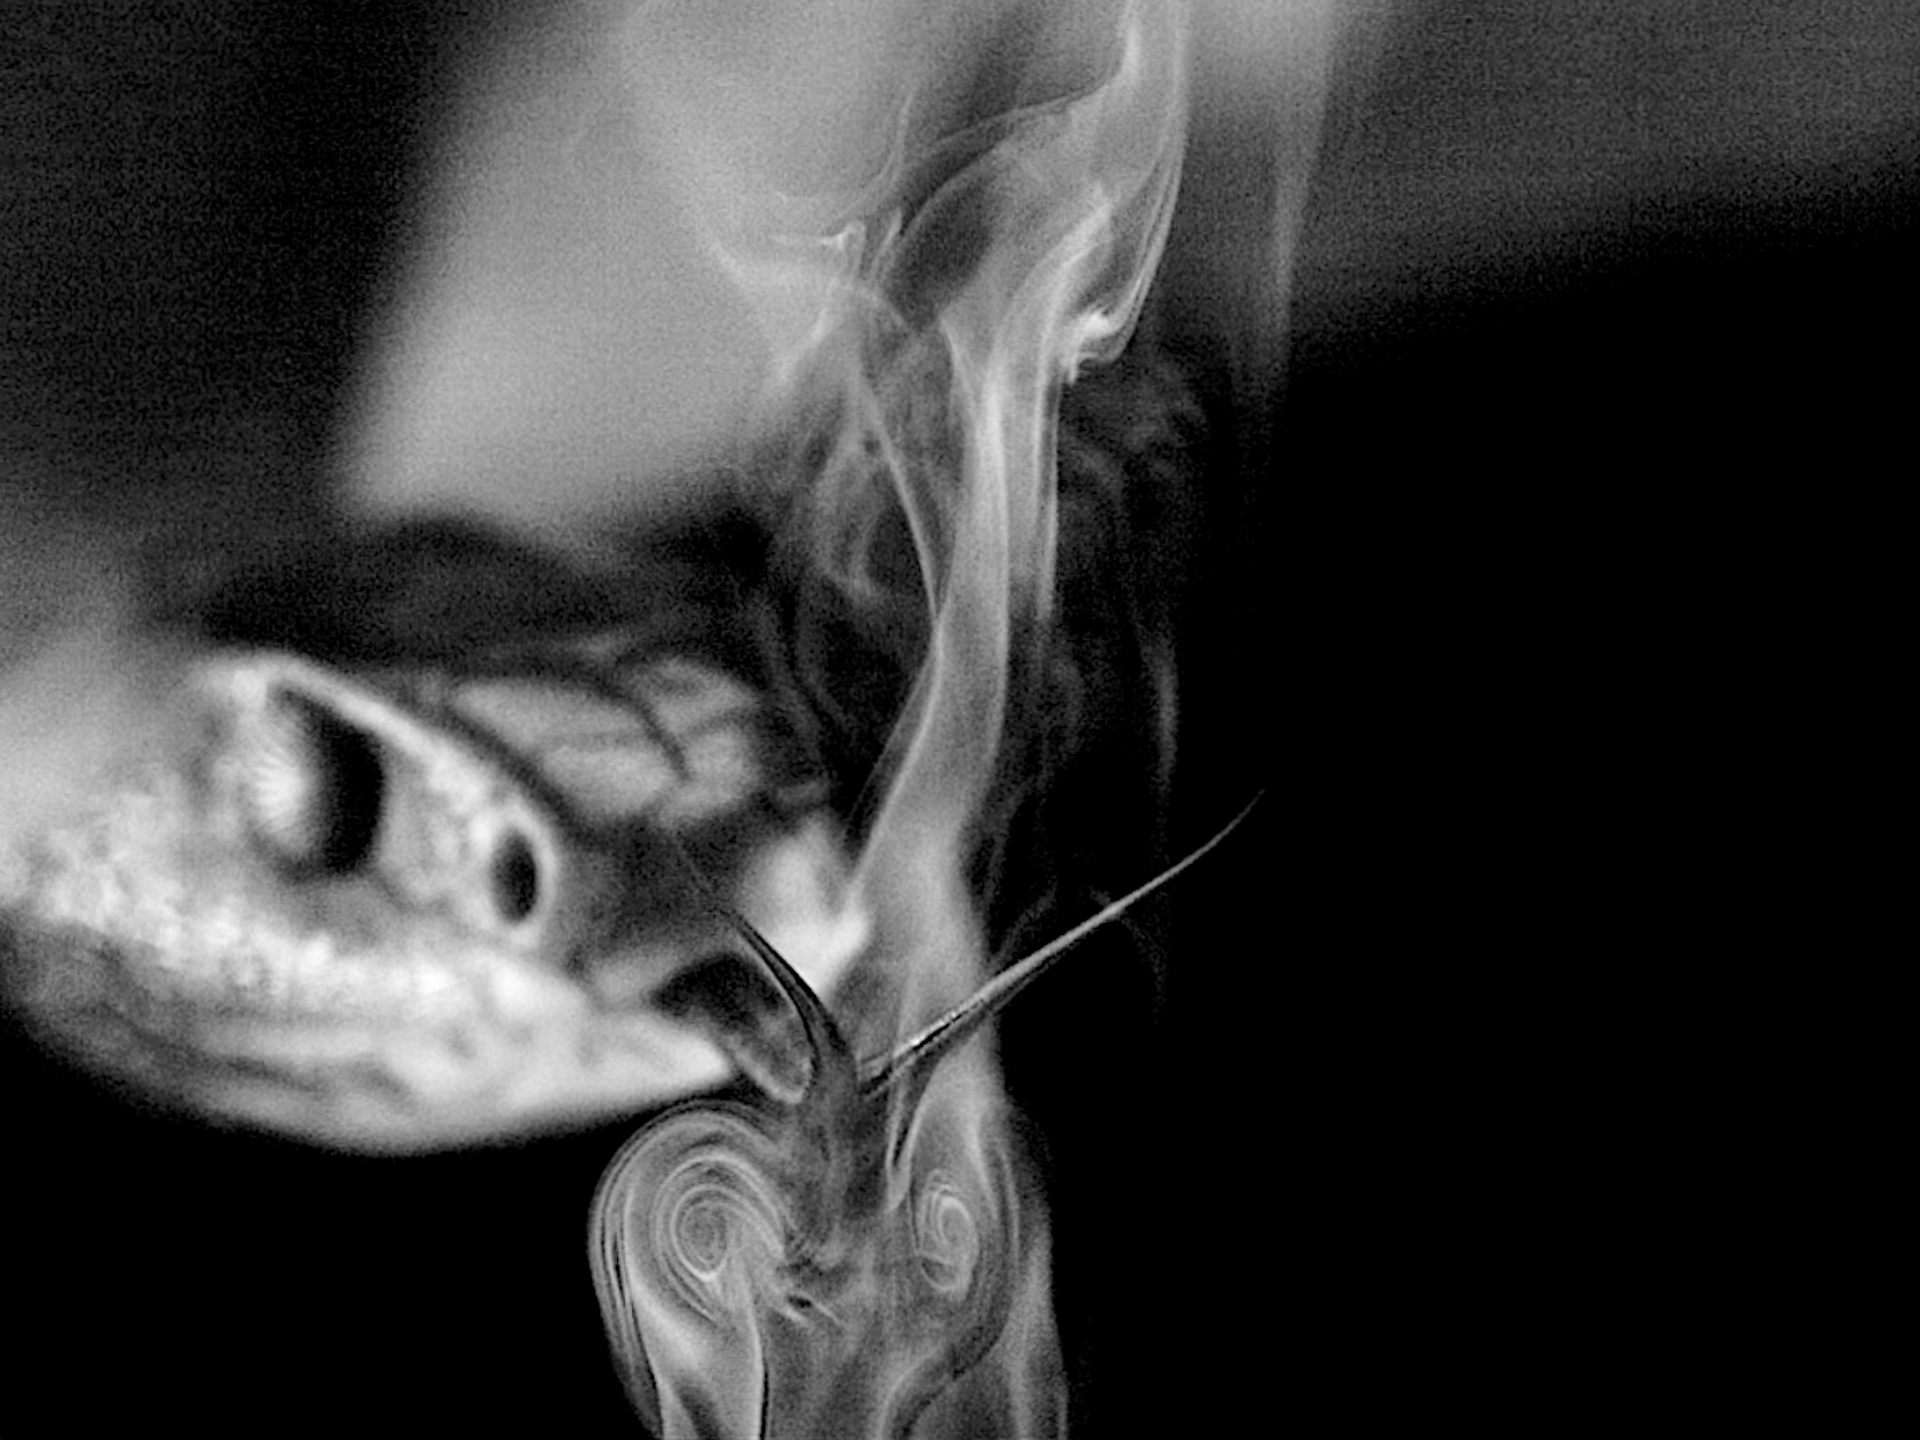 A snake flicking its toungue through a veil of smoke creating two swirls